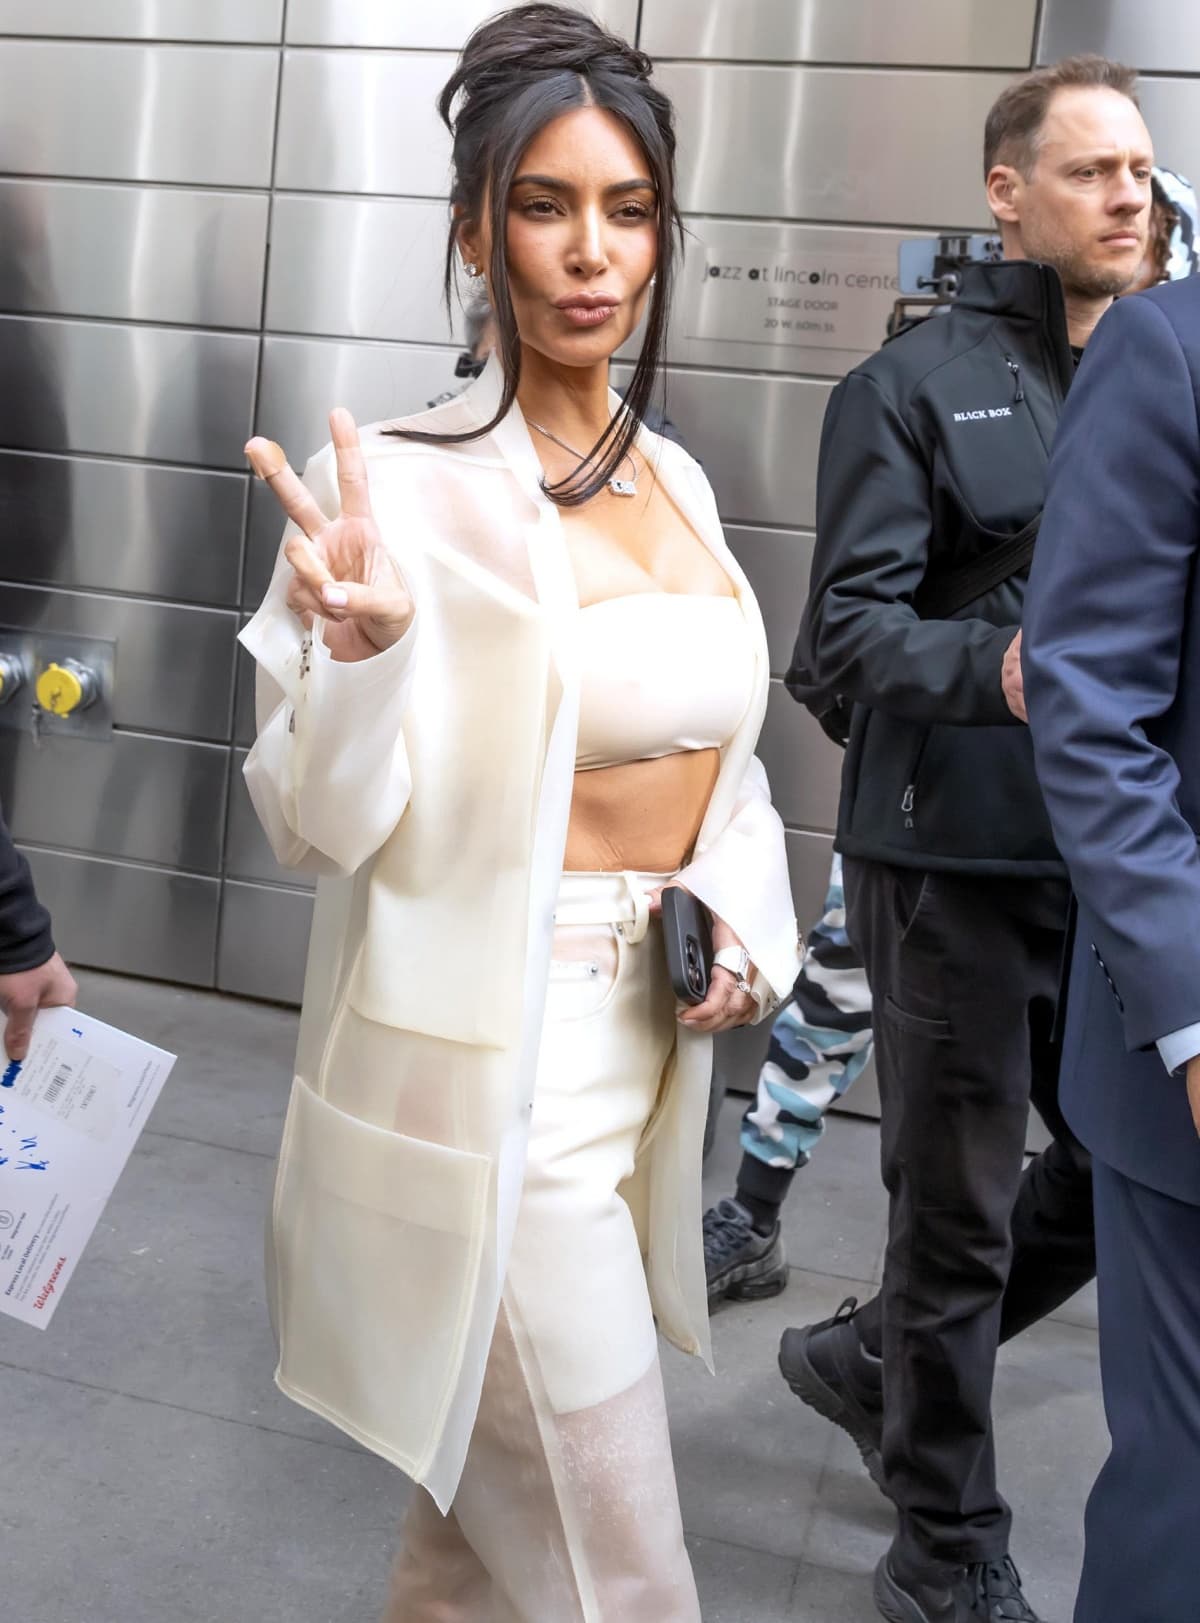 Kim Kardashian flashing a peace sign as she exits the Time100 Summit